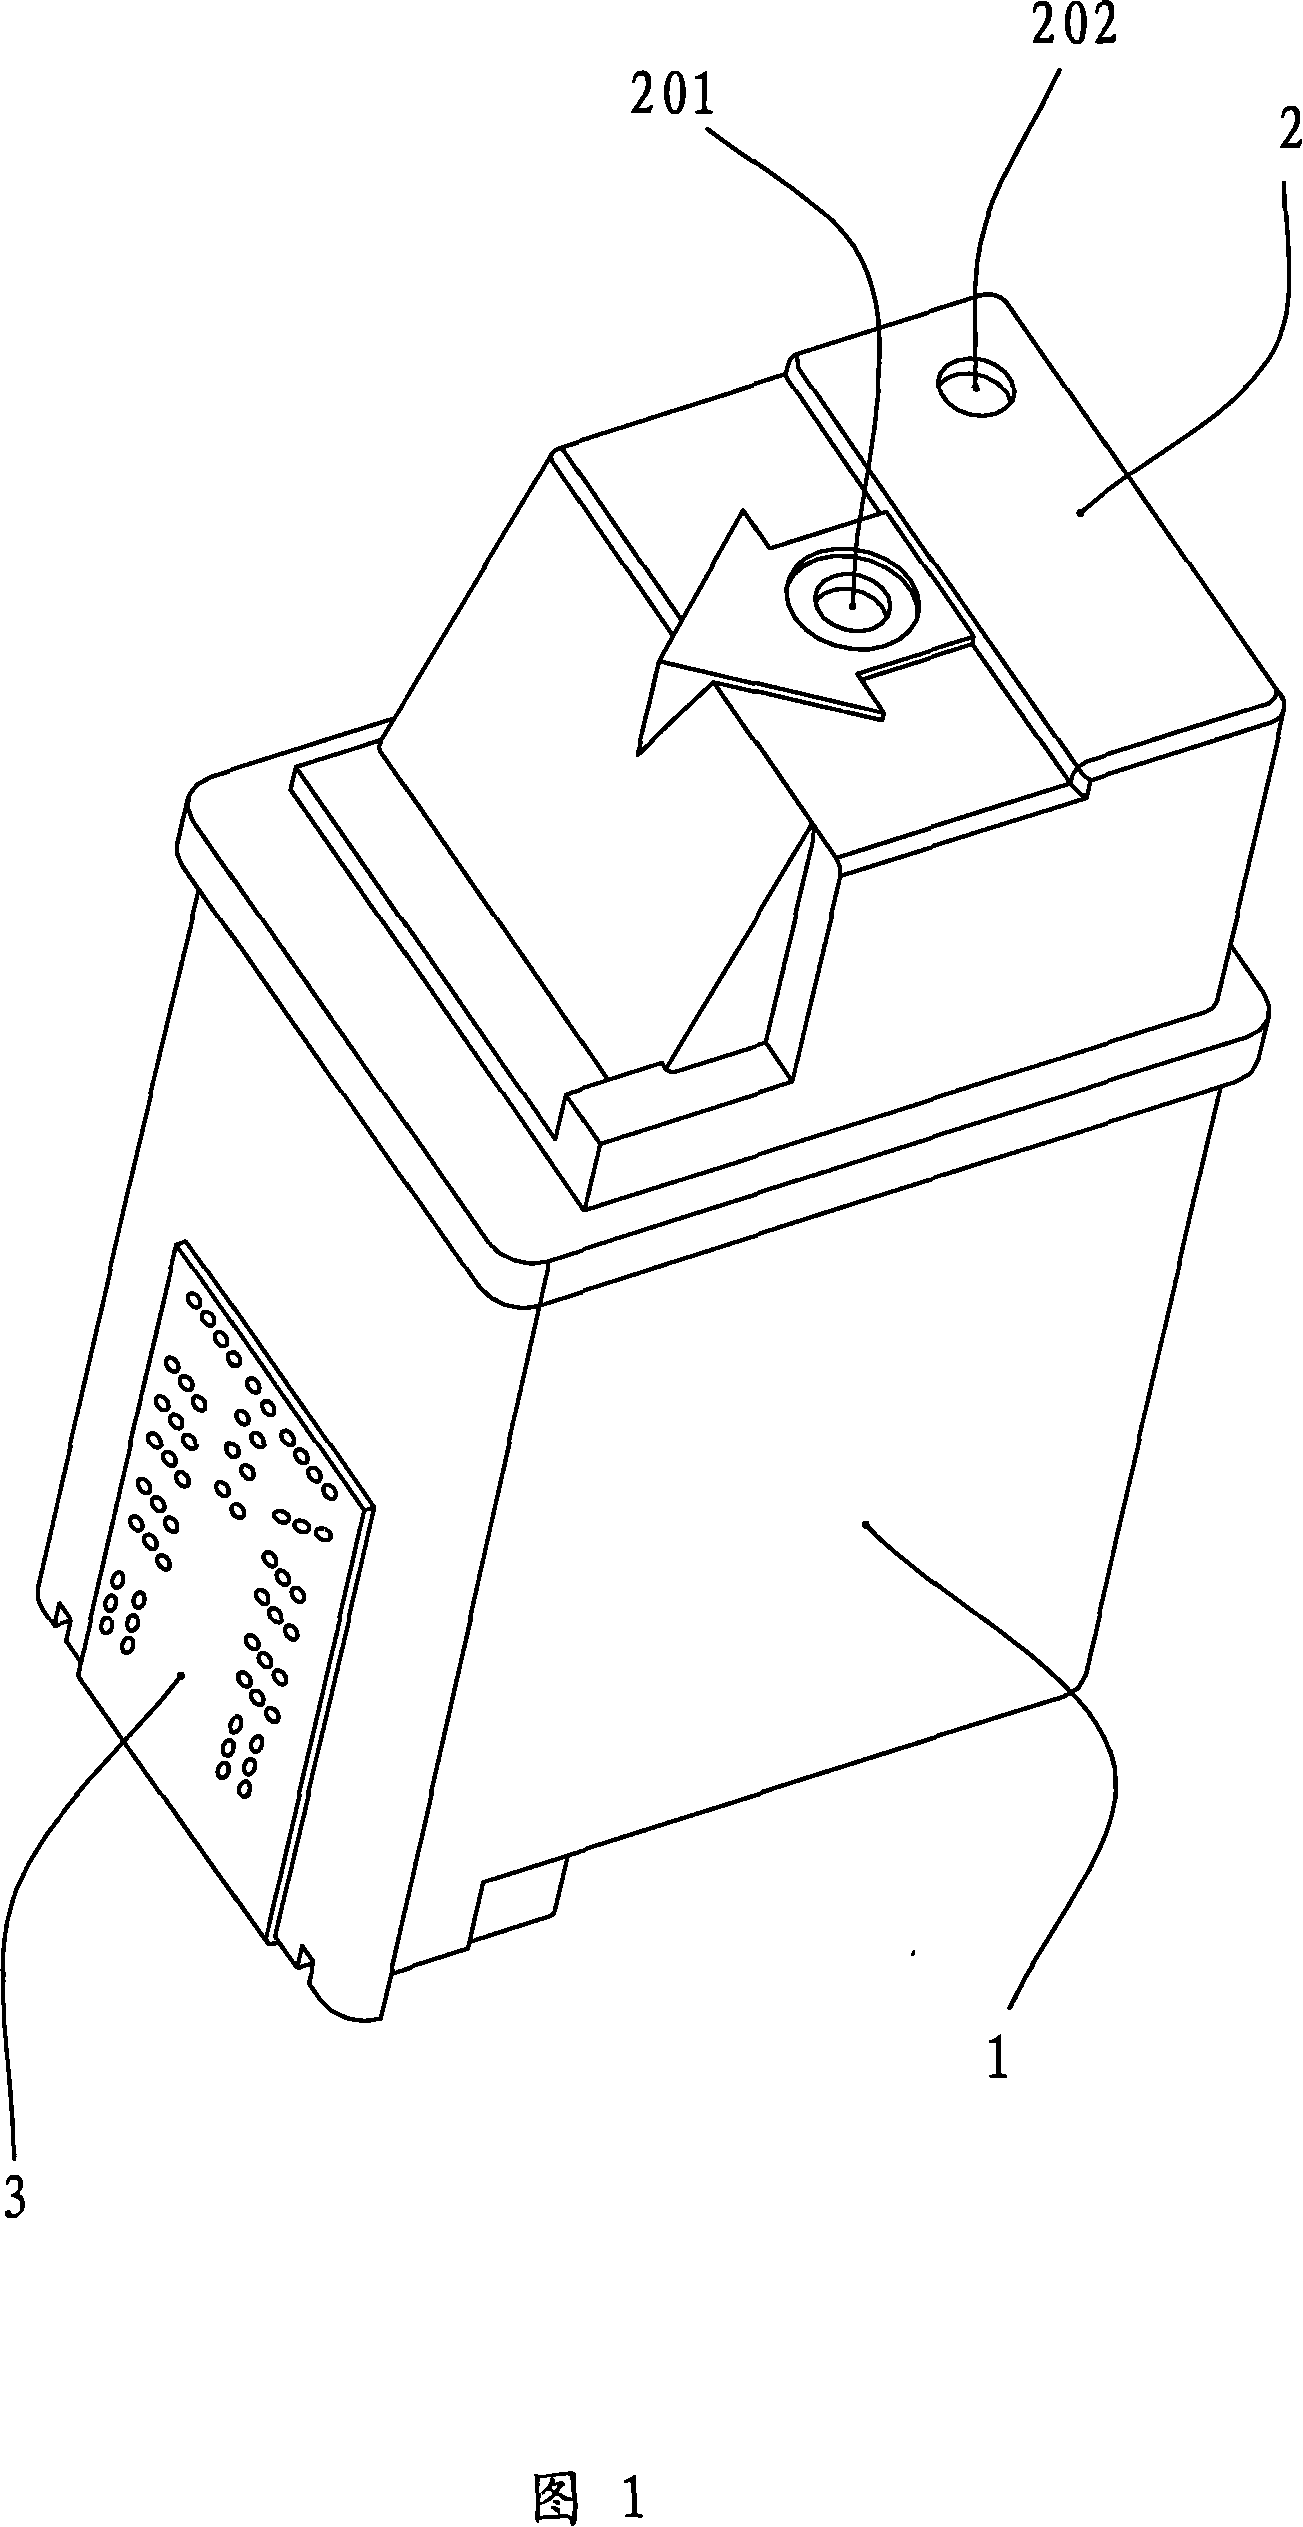 Regeneration method for printer cartridge